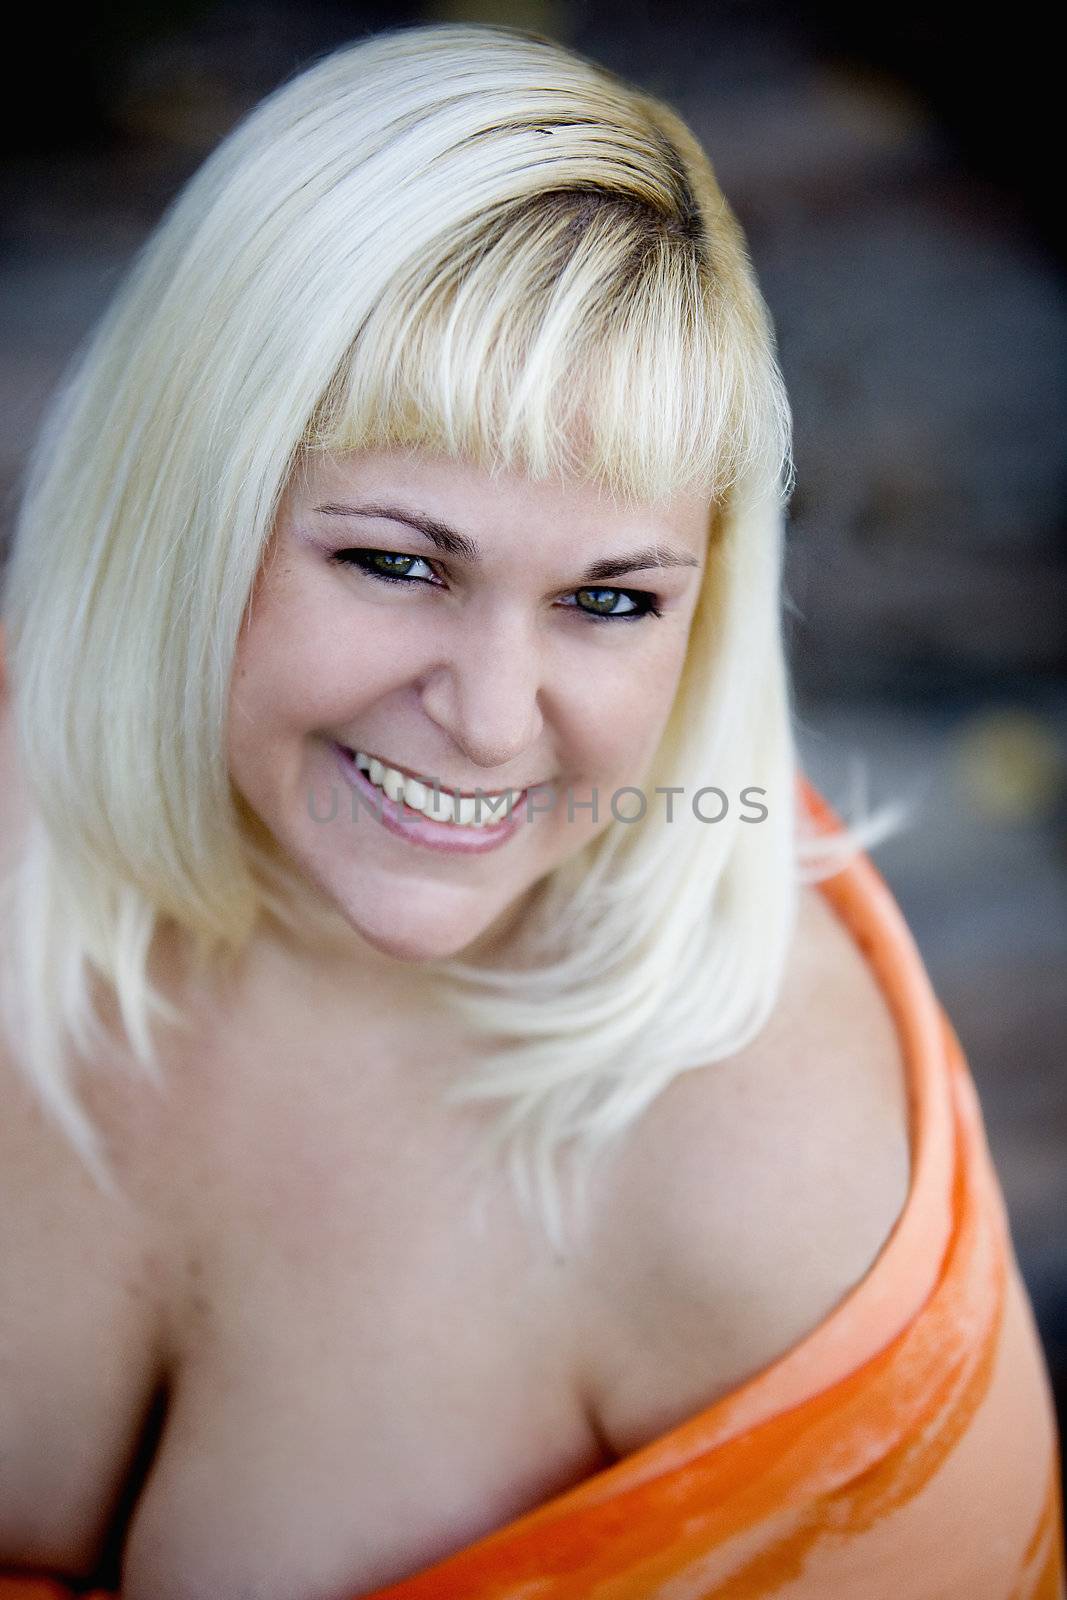 Sexy voluptuous blonde smiling